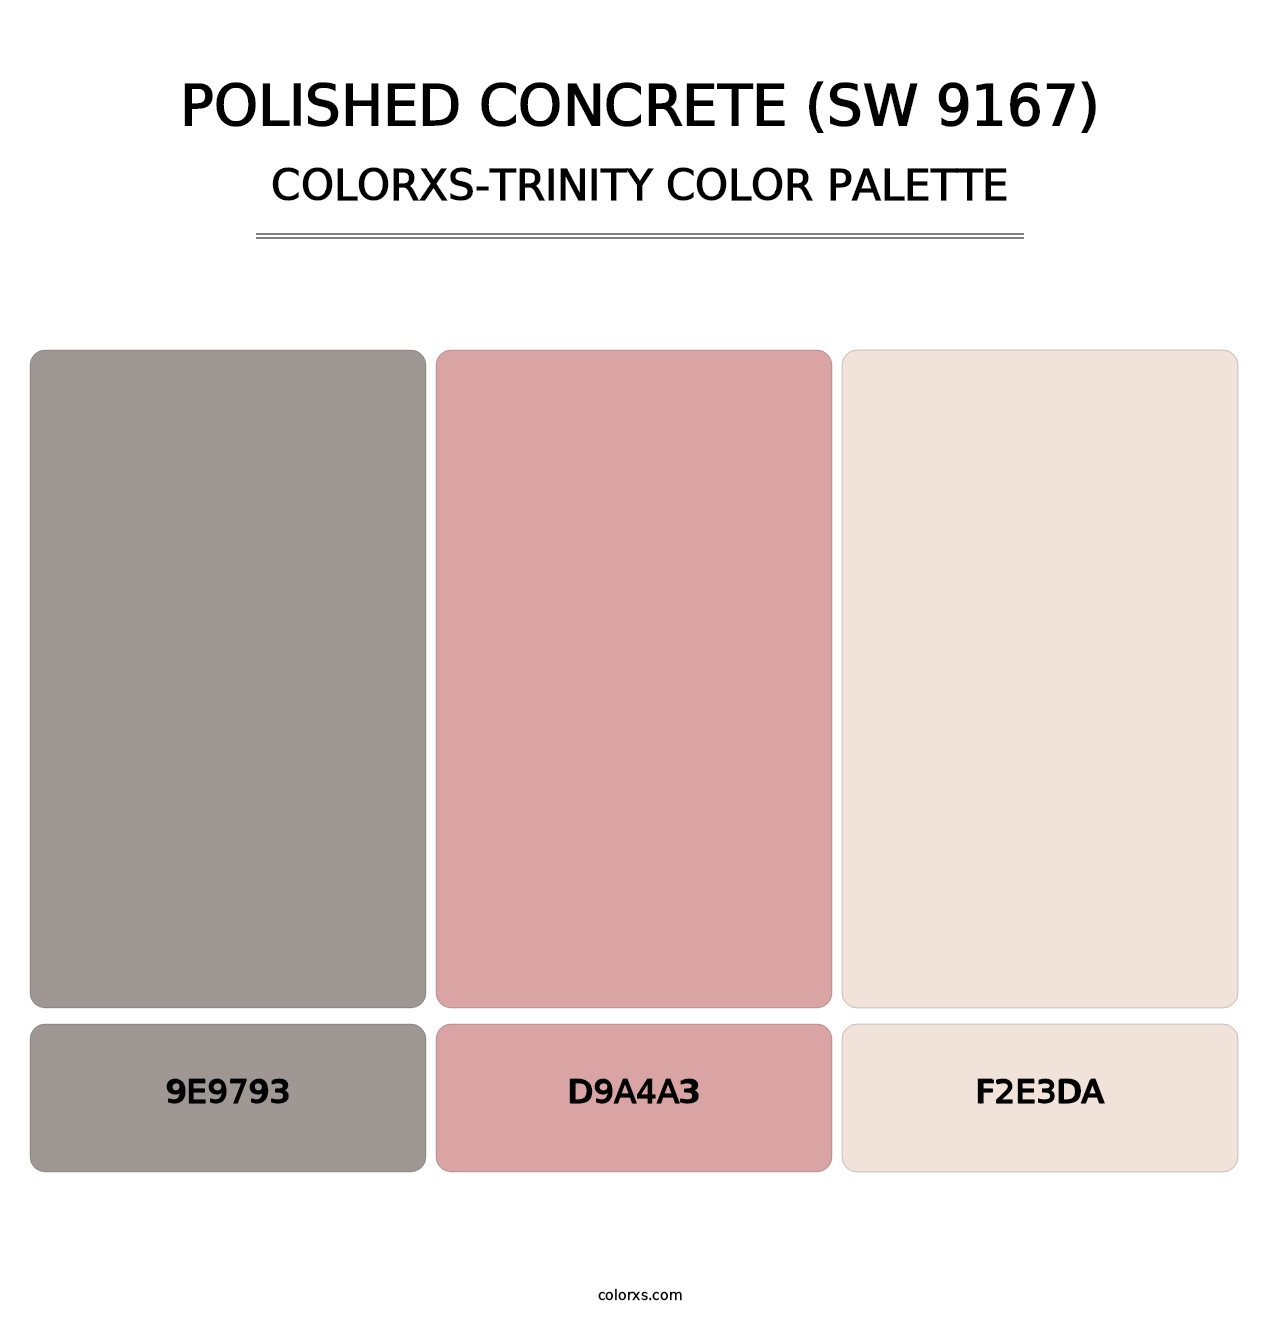 Polished Concrete (SW 9167) - Colorxs Trinity Palette